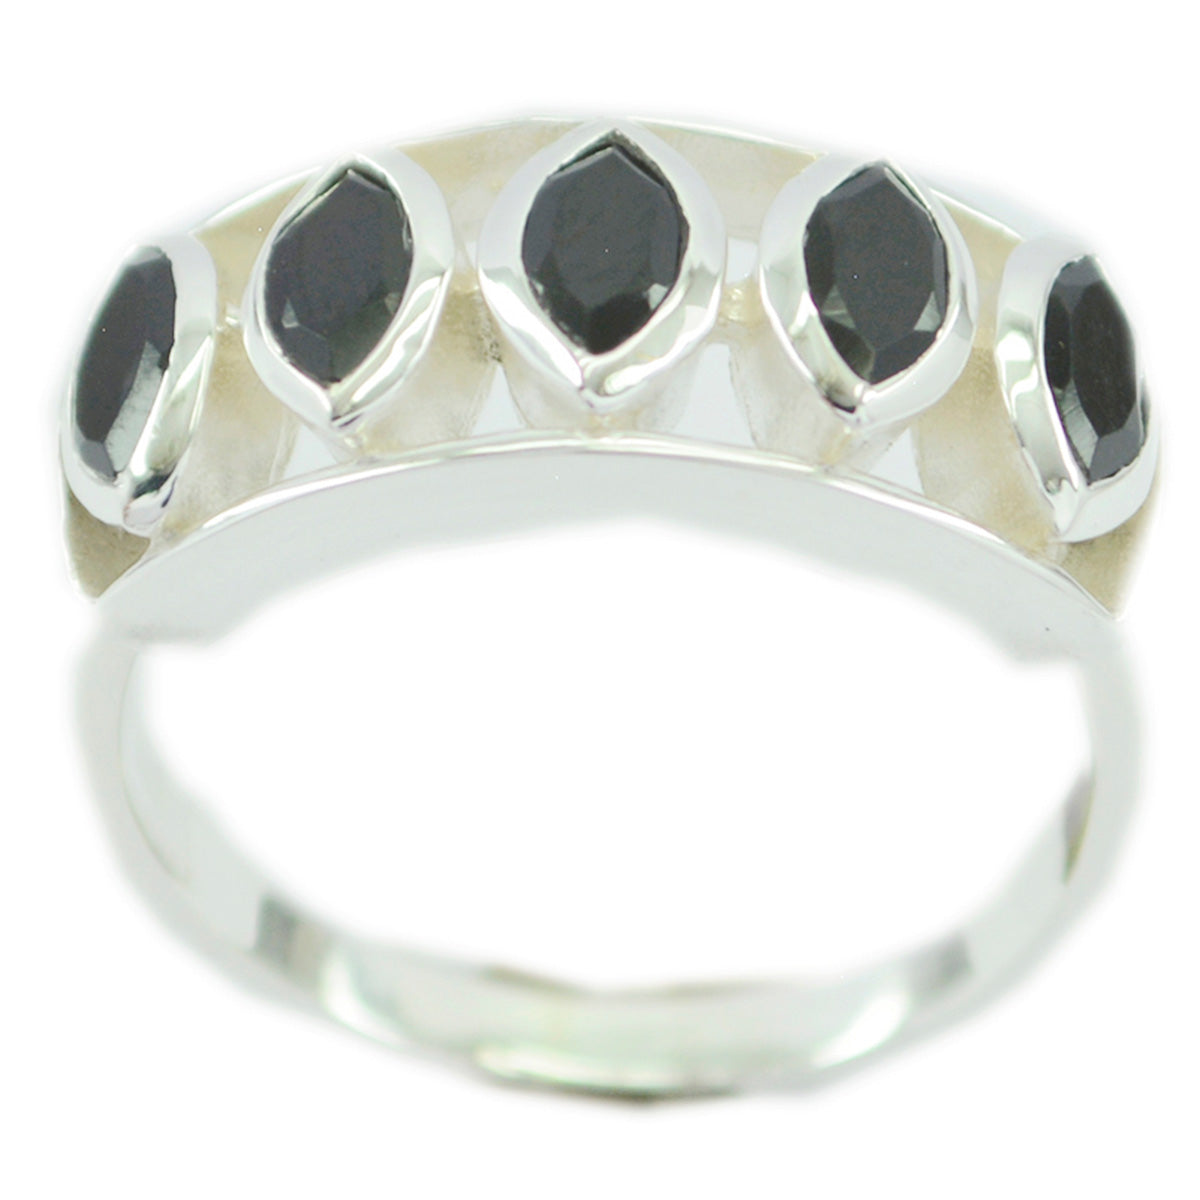 Riyo Presentable Gemstone Black Onyx Solid Silver Ring Jewelry Bag